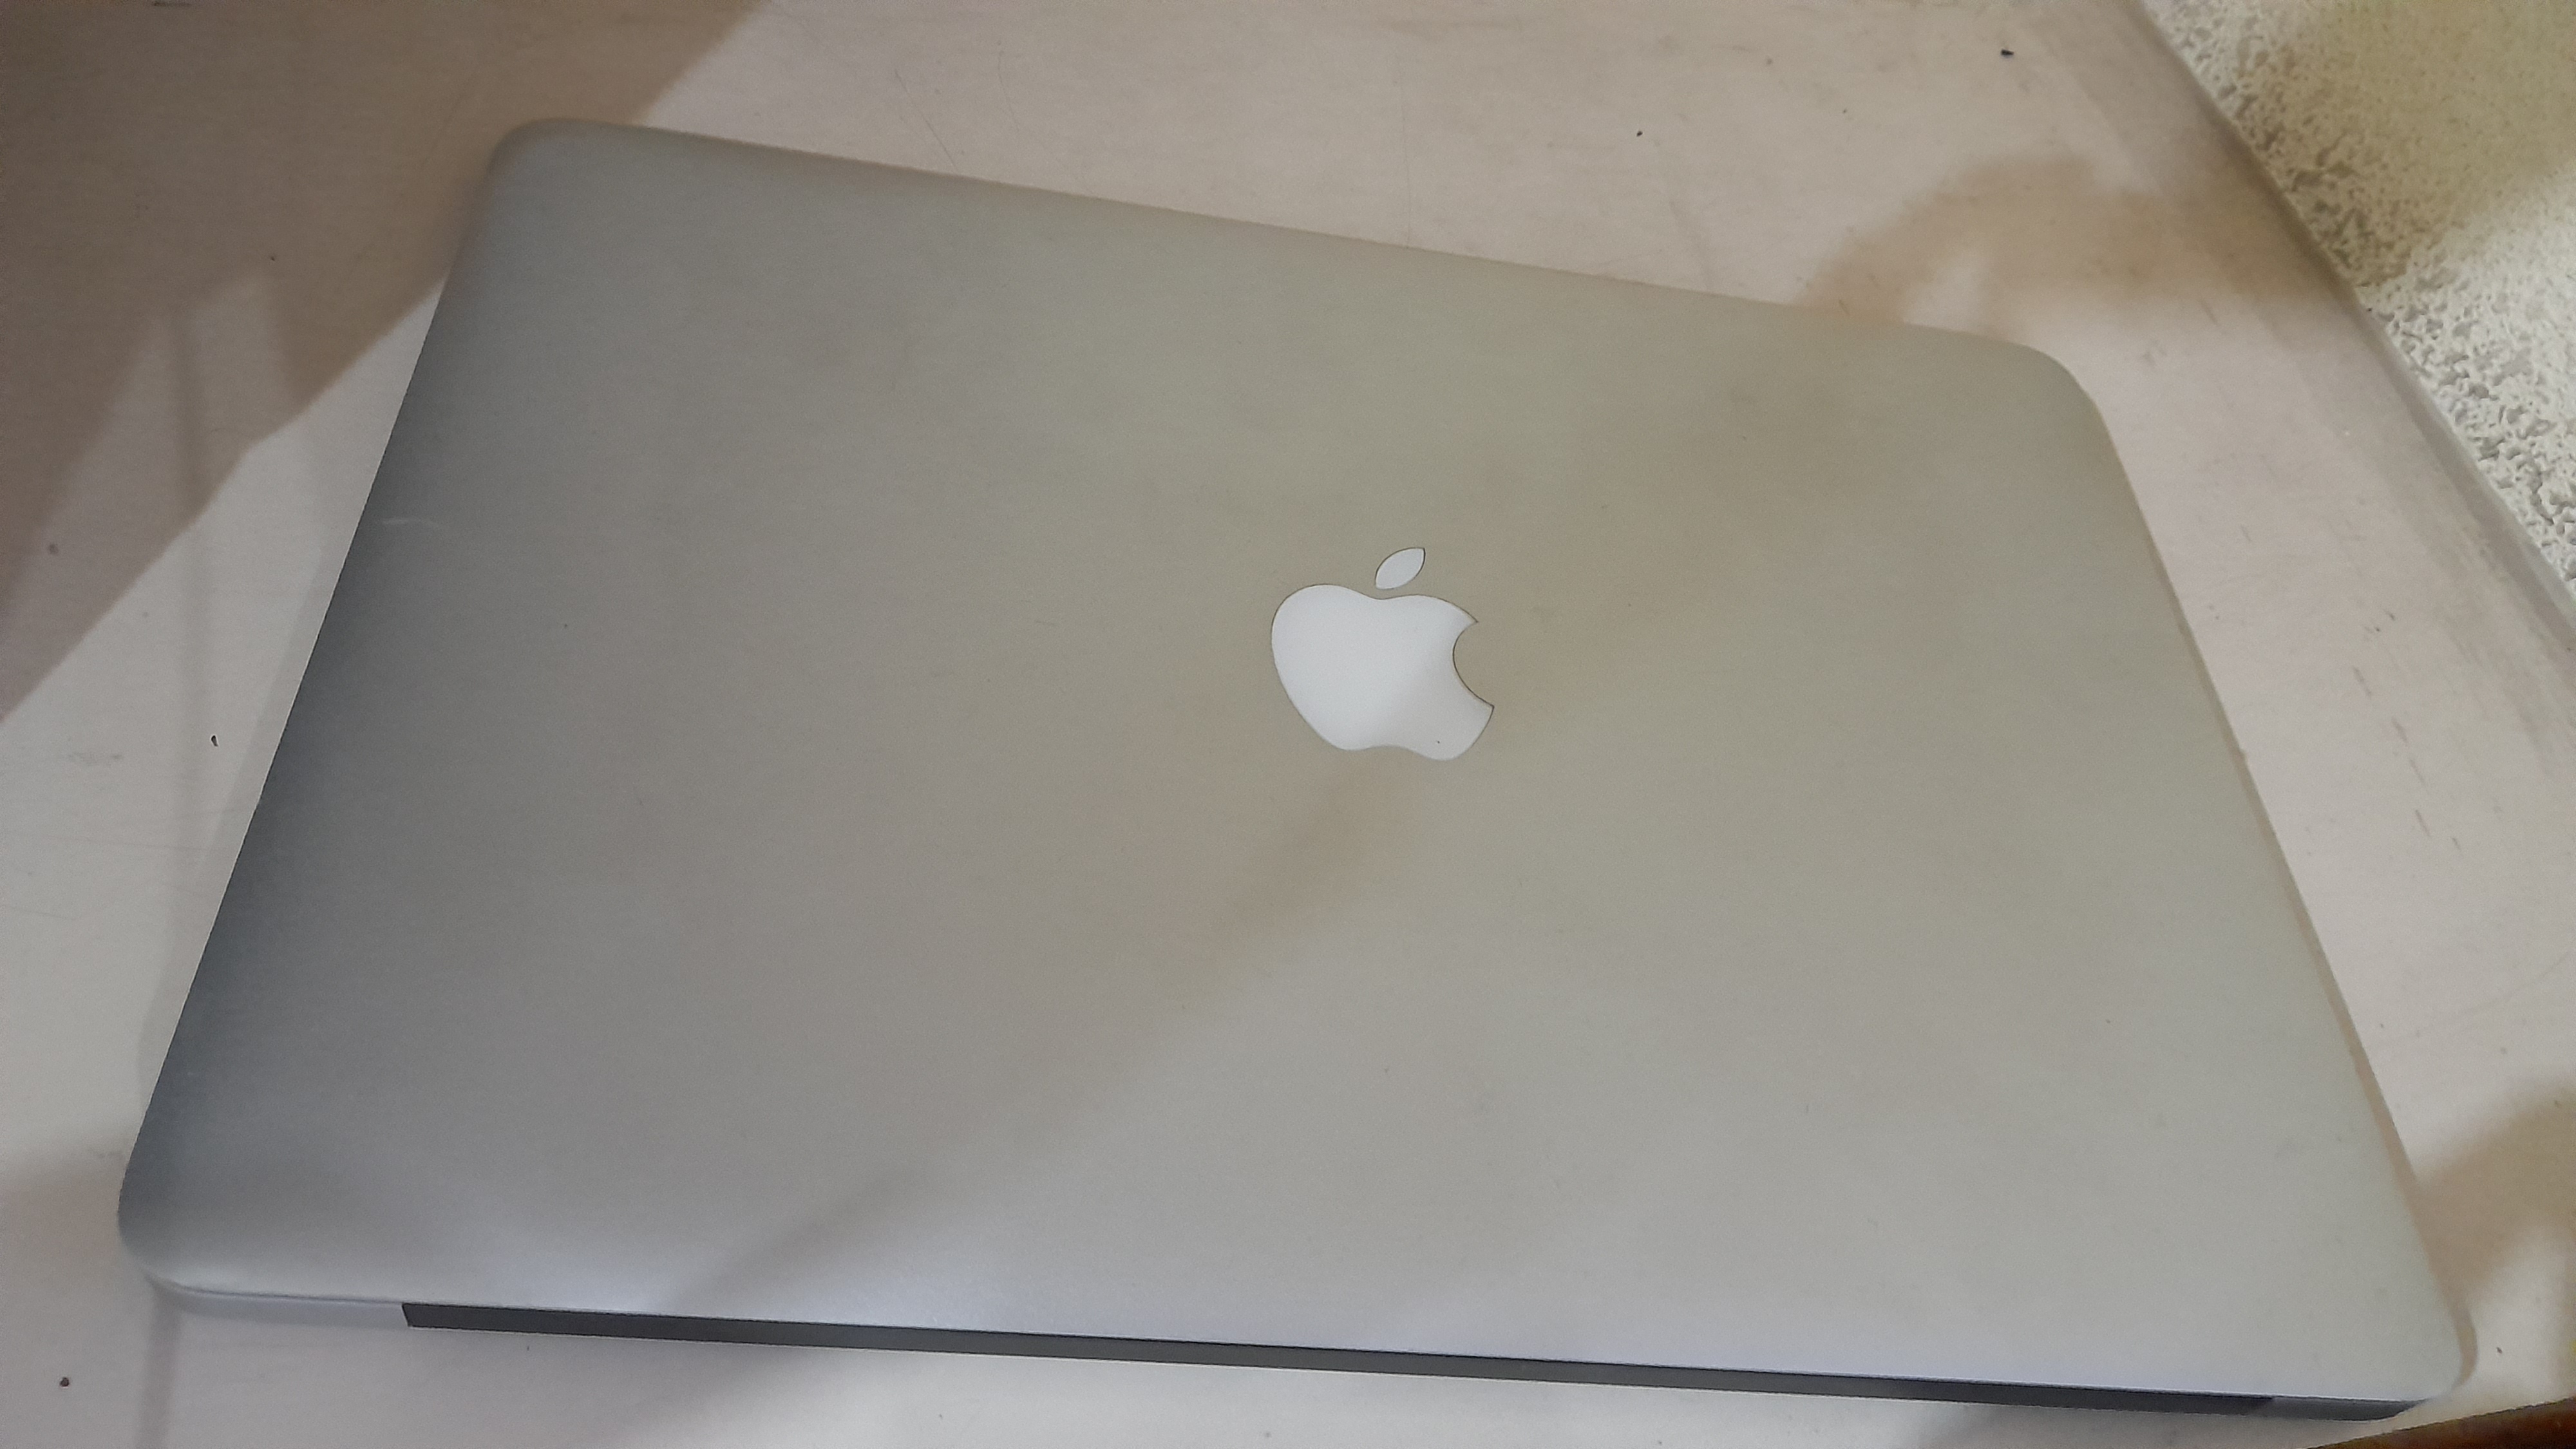 MacBook Air (13-inch, Early 2015).